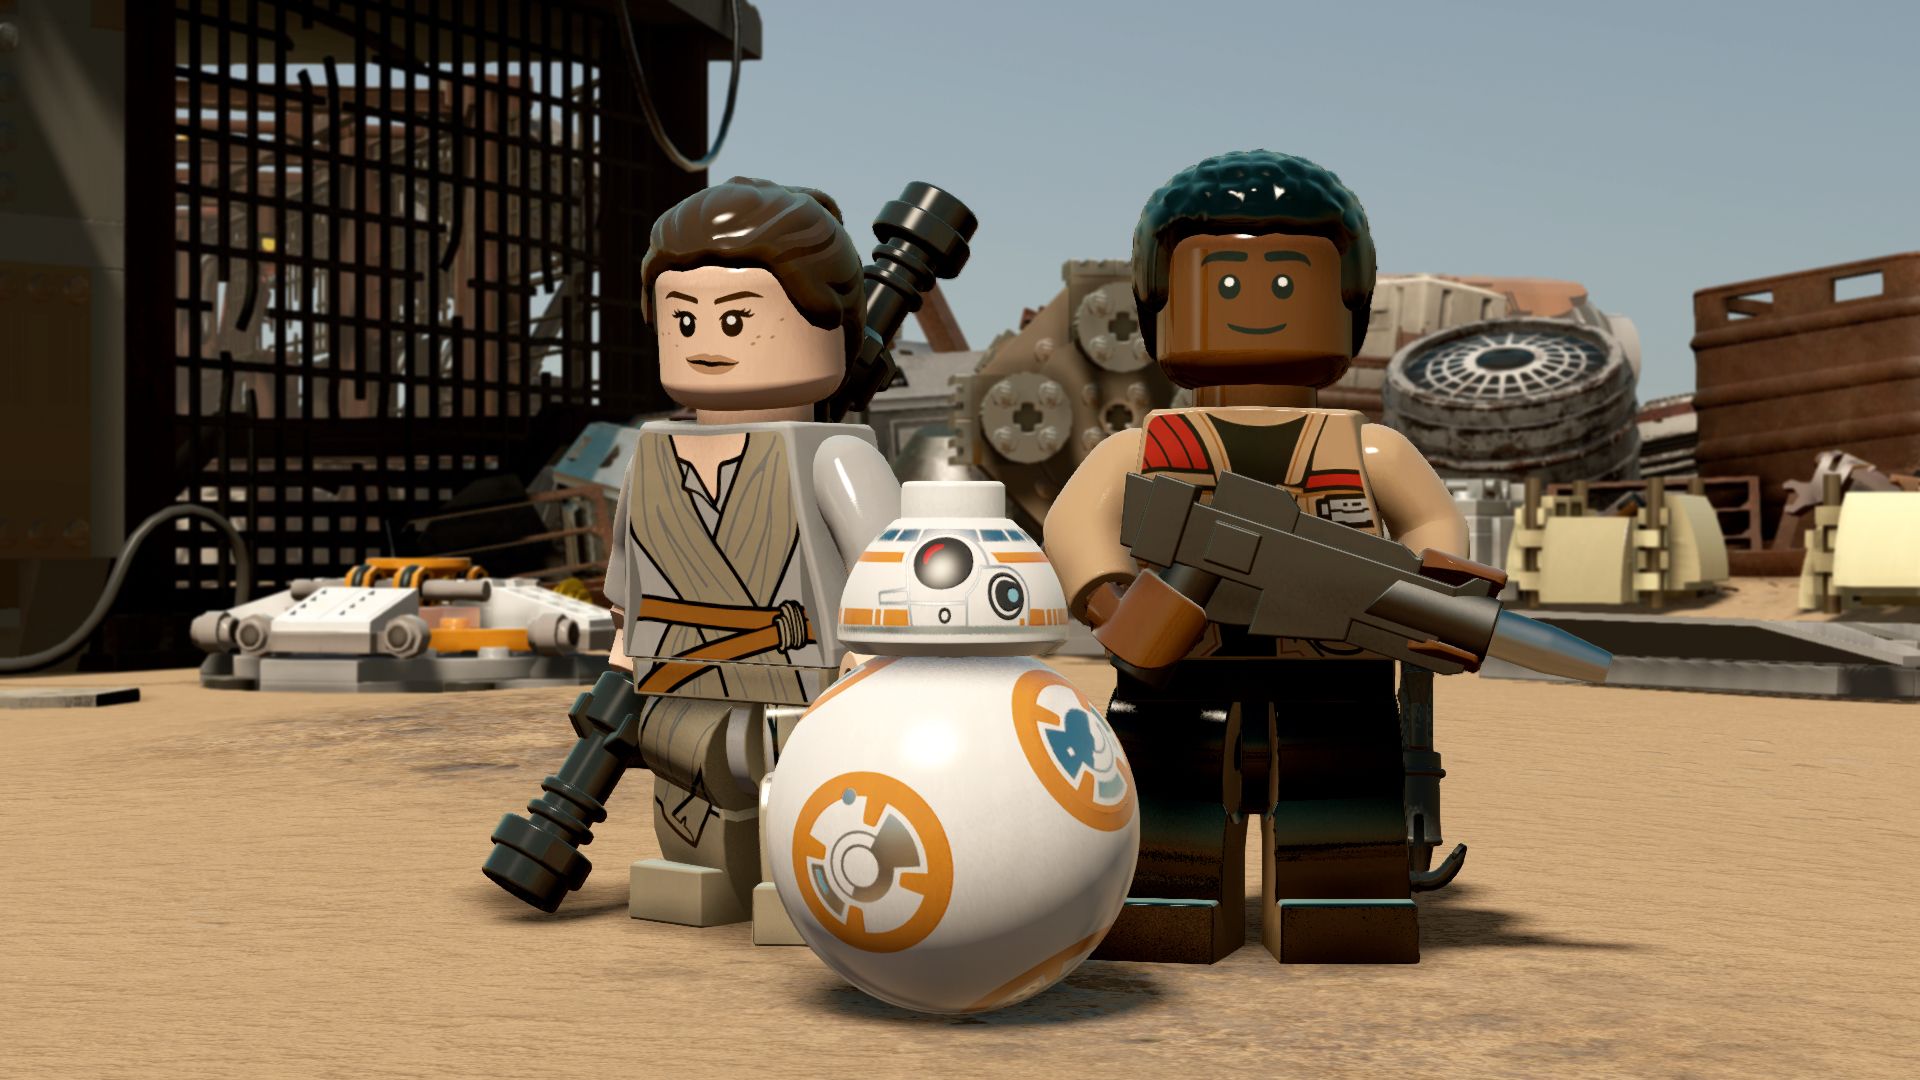 LEGO Star Wars, Seriously?